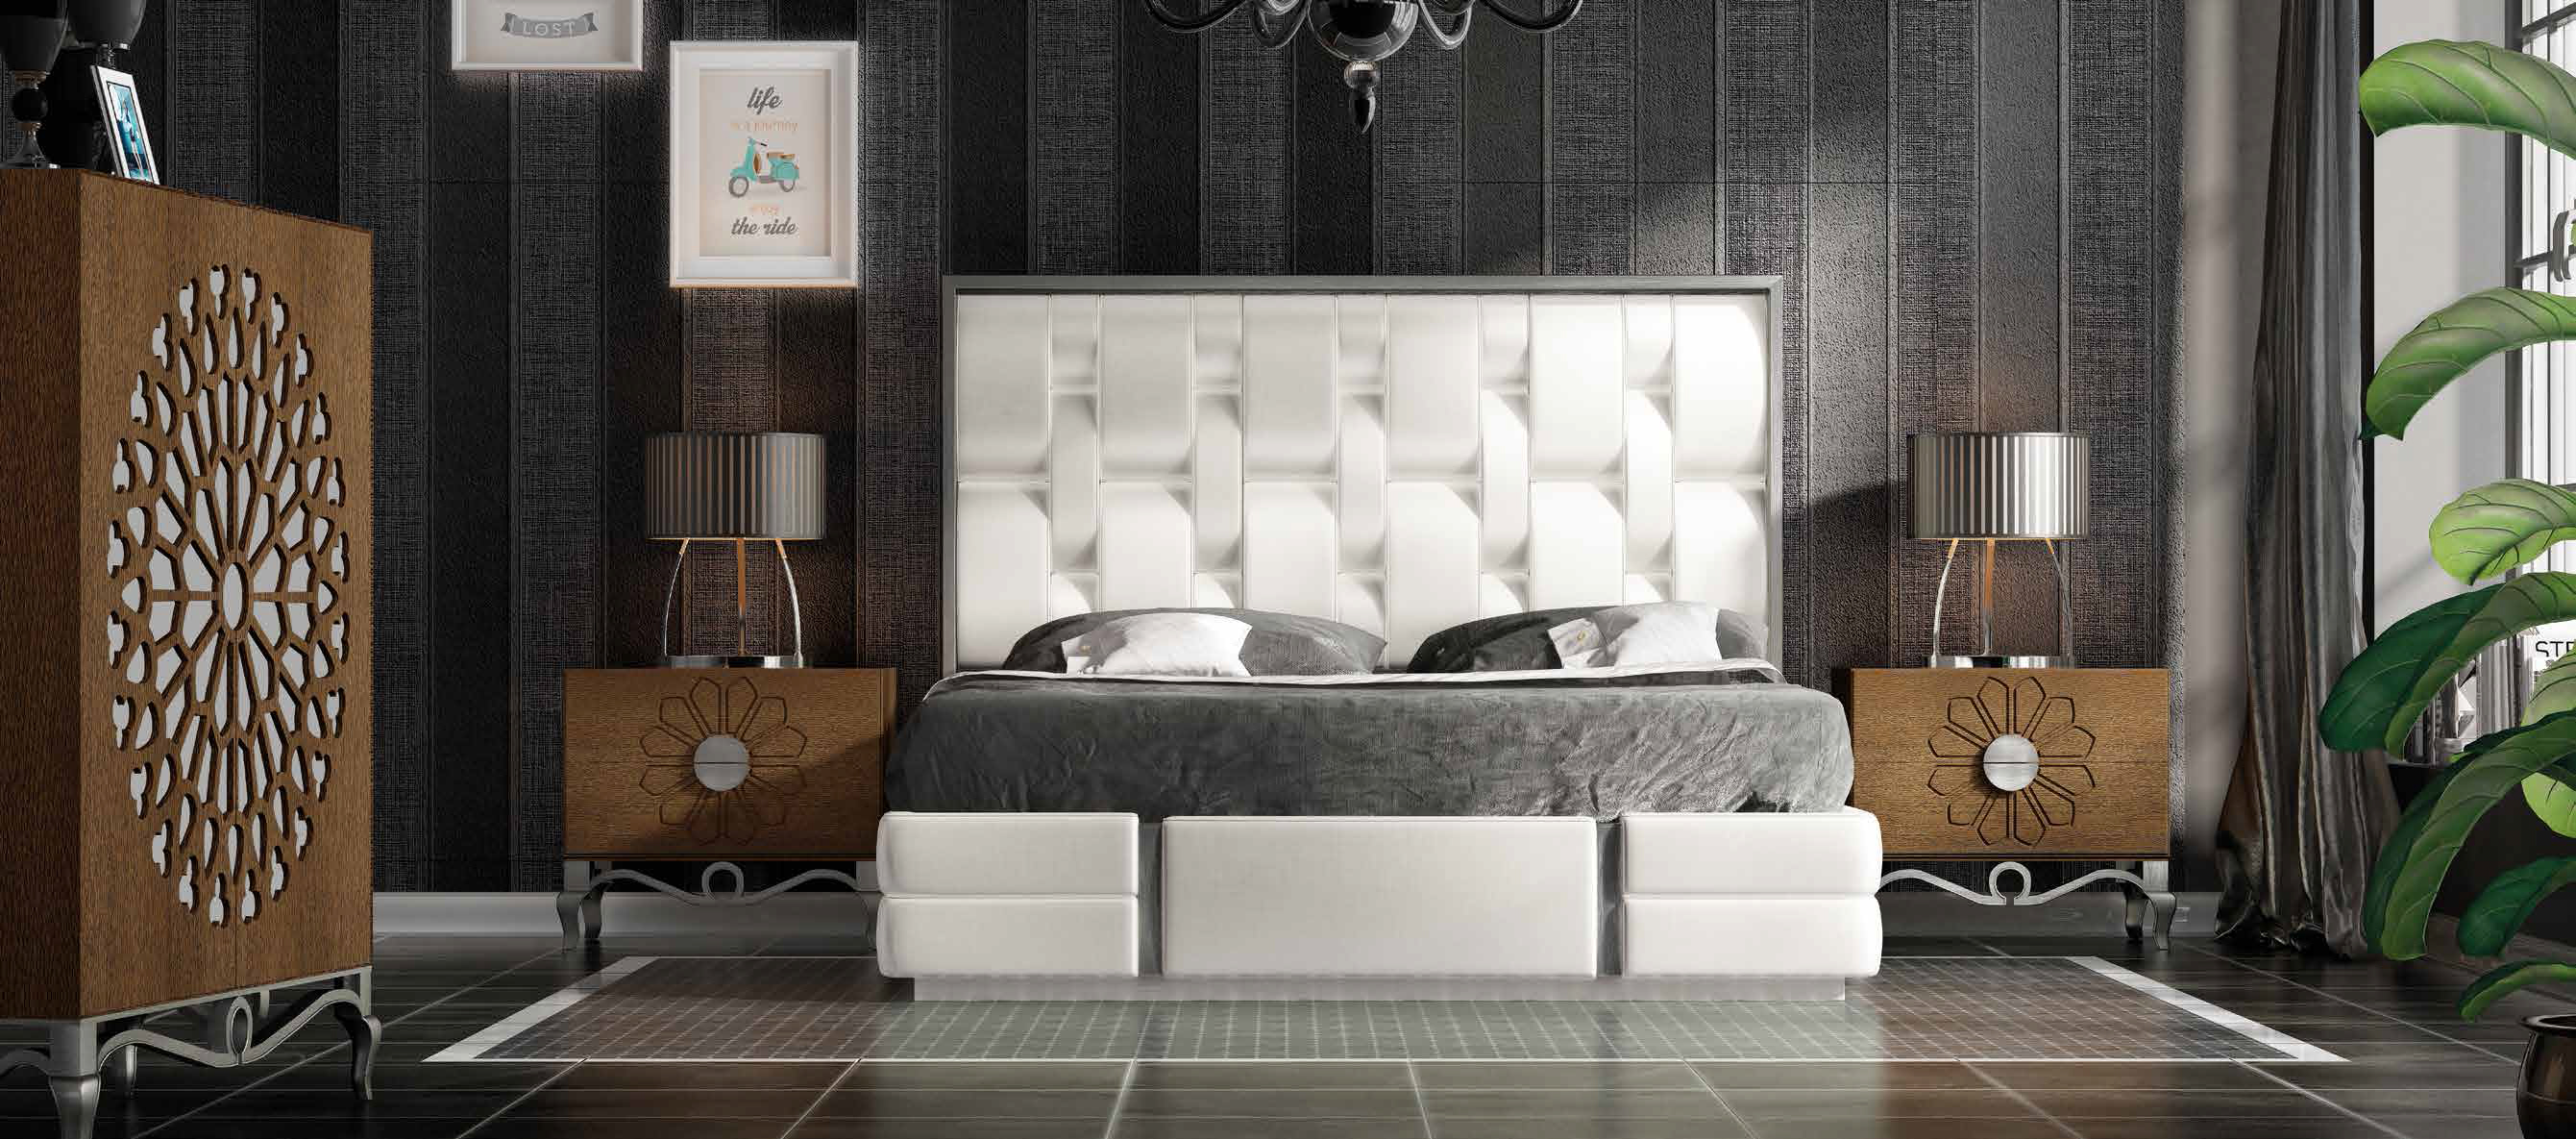 Brands Franco Furniture Bedrooms vol2, Spain DOR 57